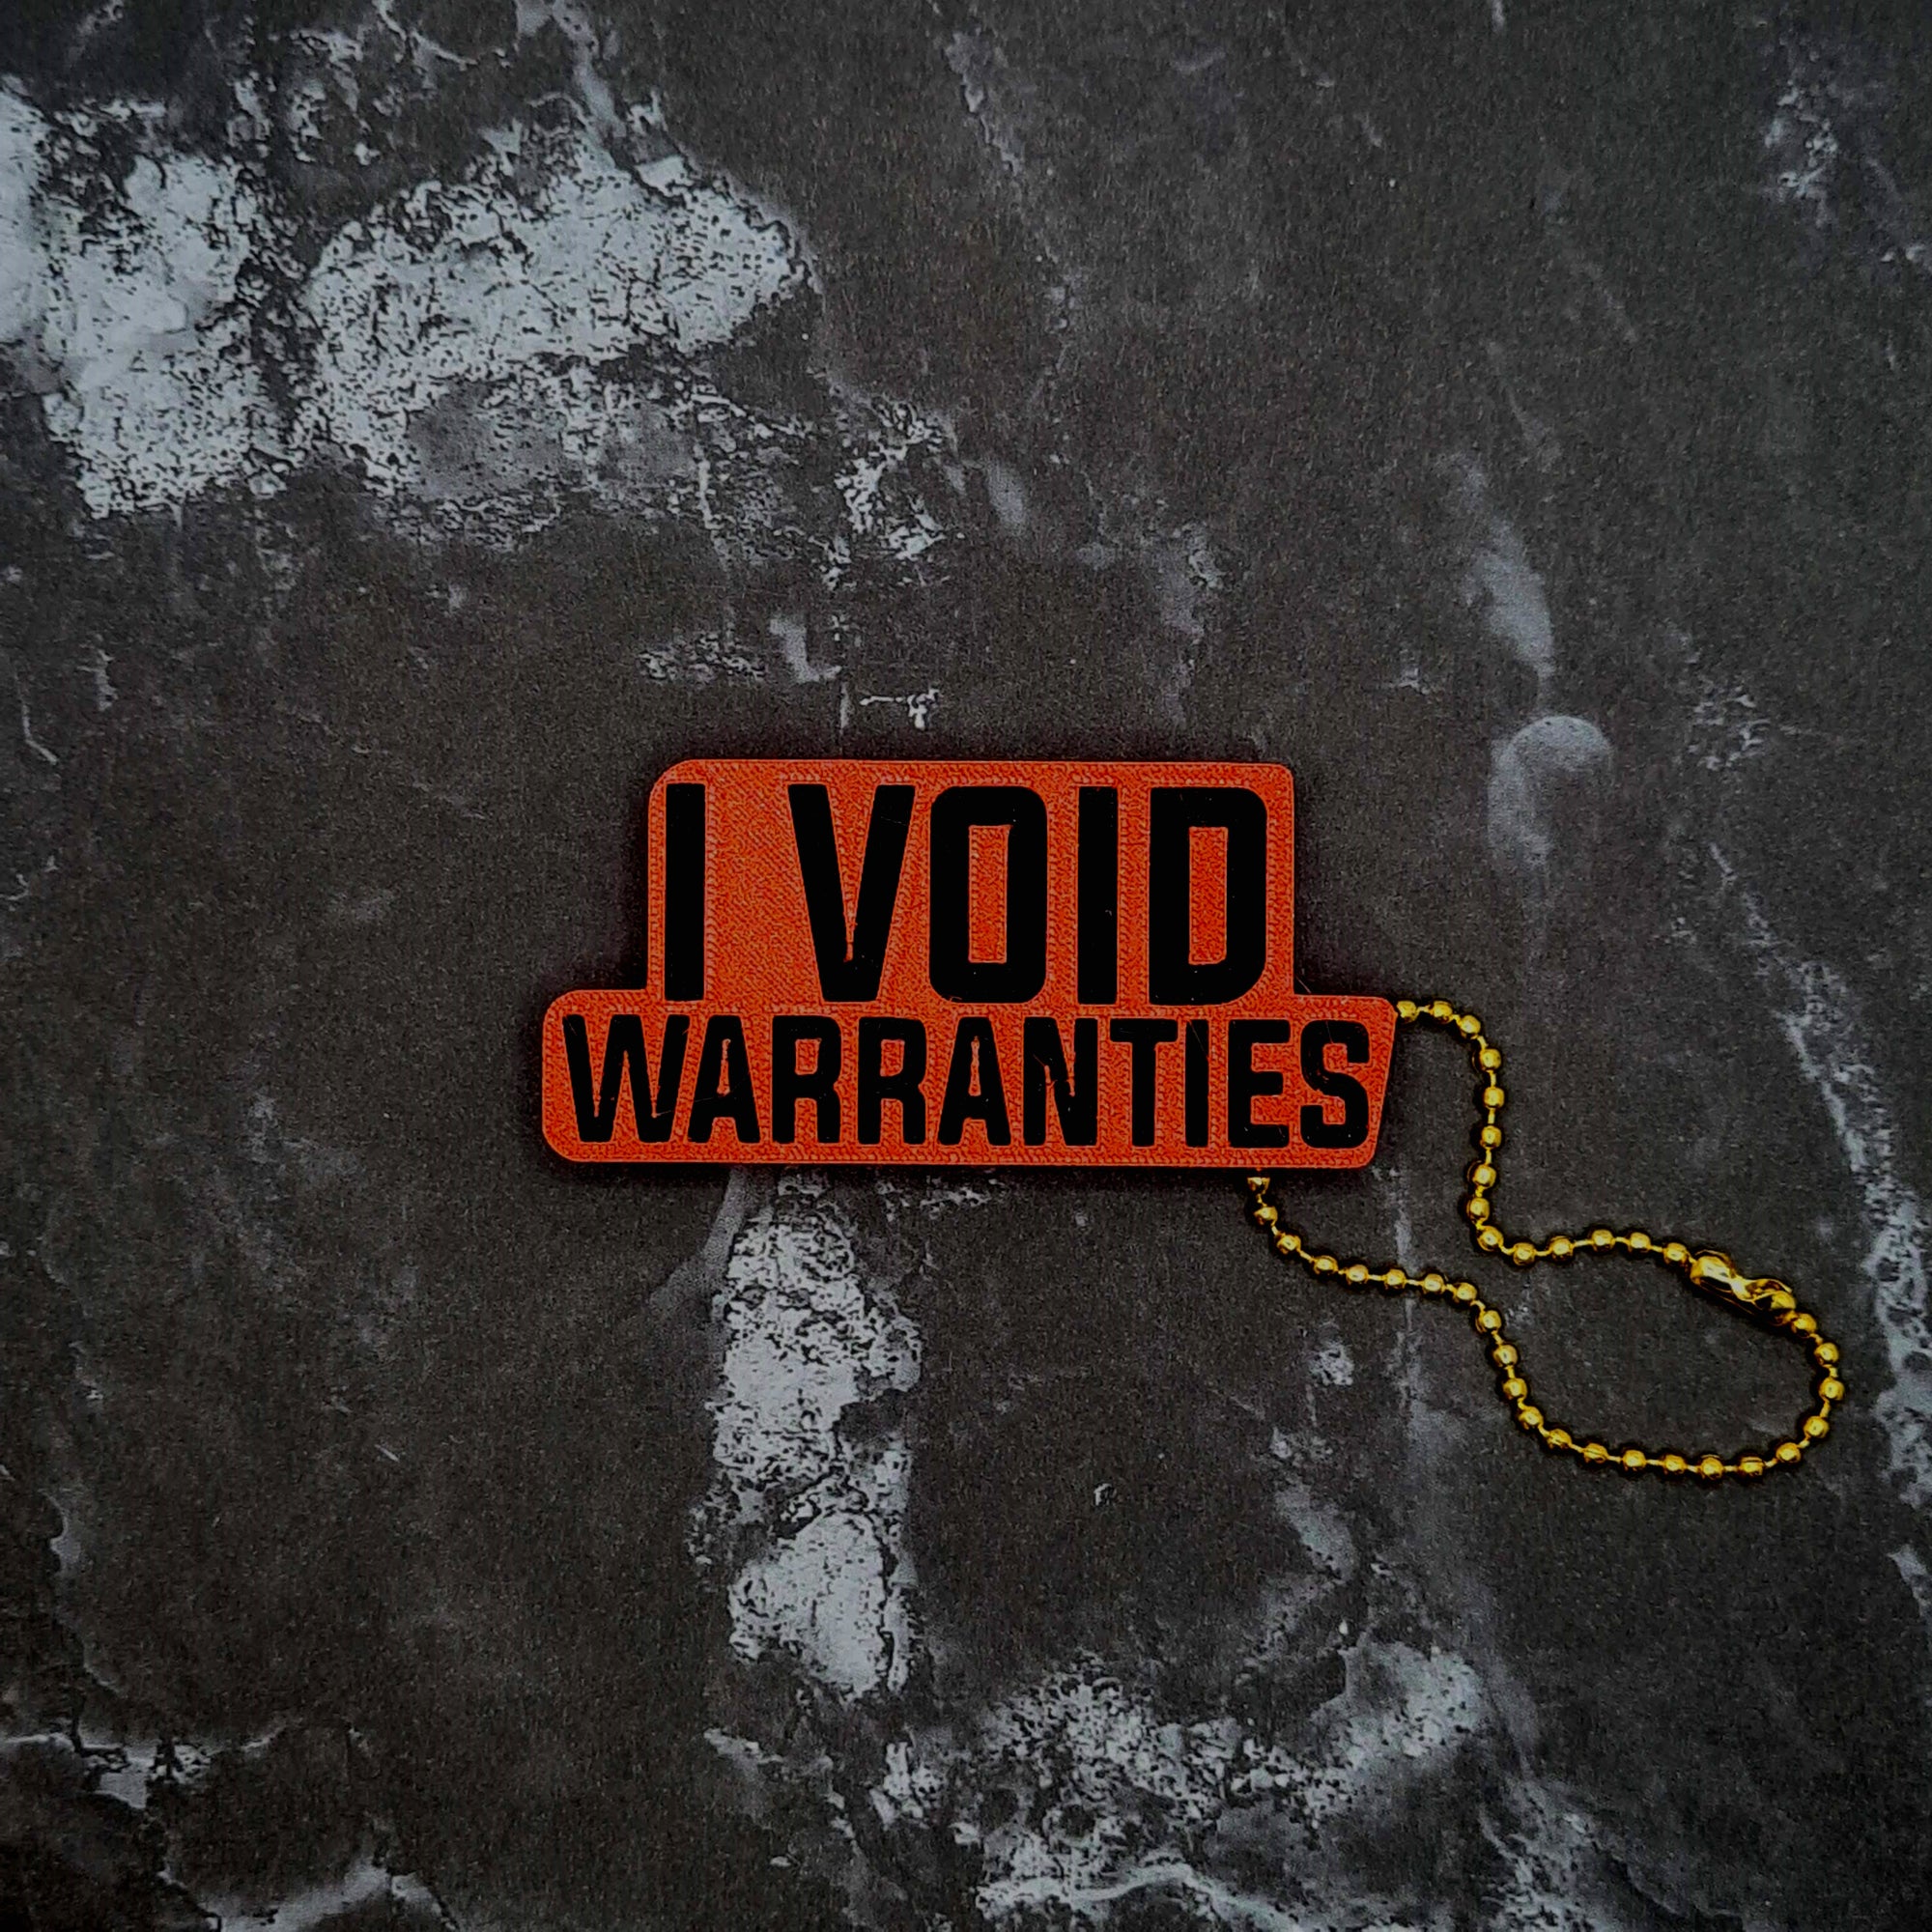 I Void Warranties Keychain!